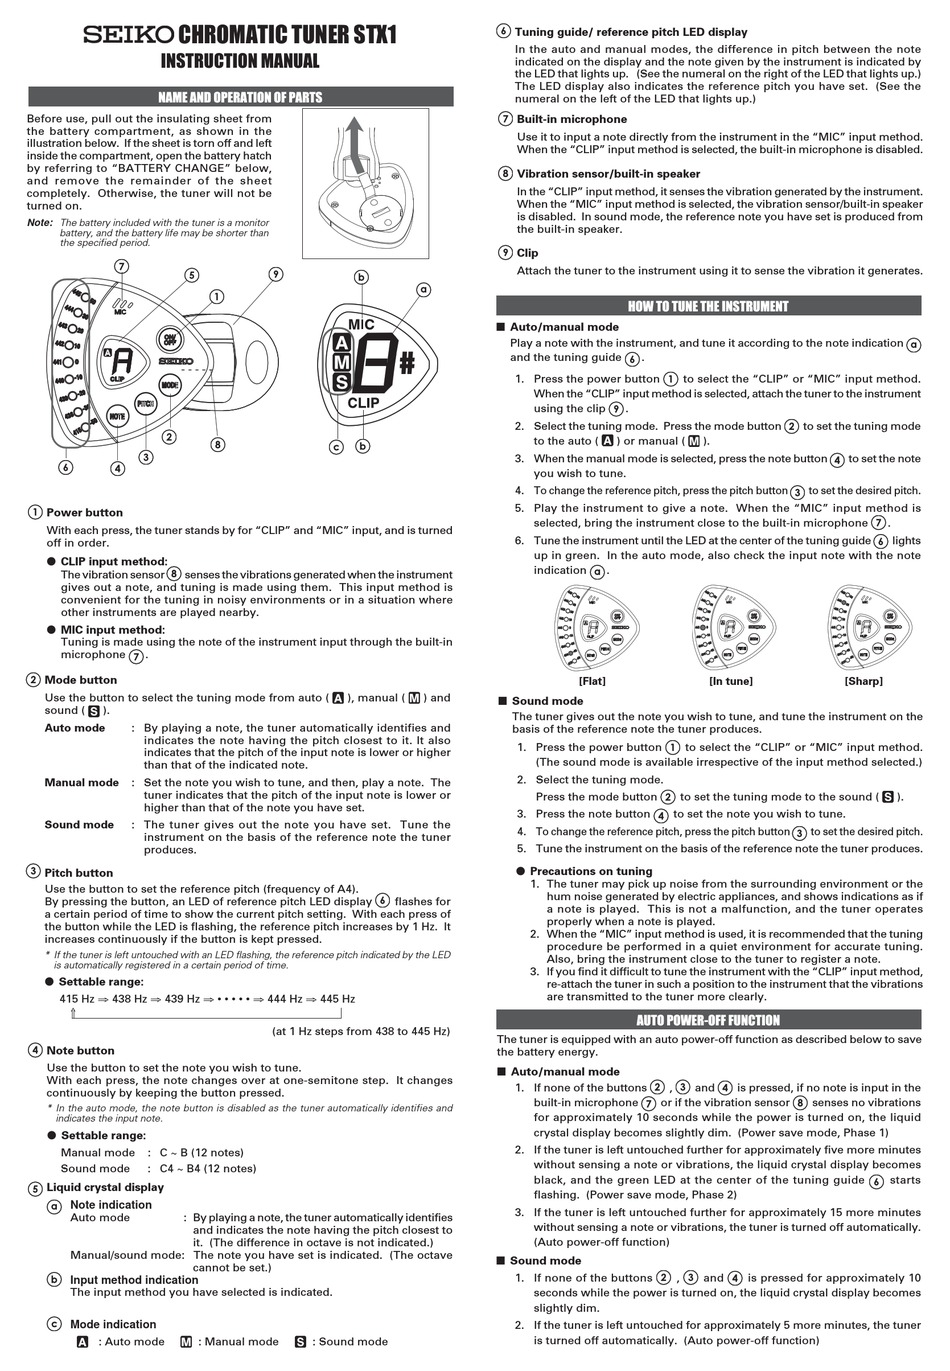 SEIKO CHROMATIC TUNER STX1 INSTRUCTION MANUAL Pdf Download | ManualsLib